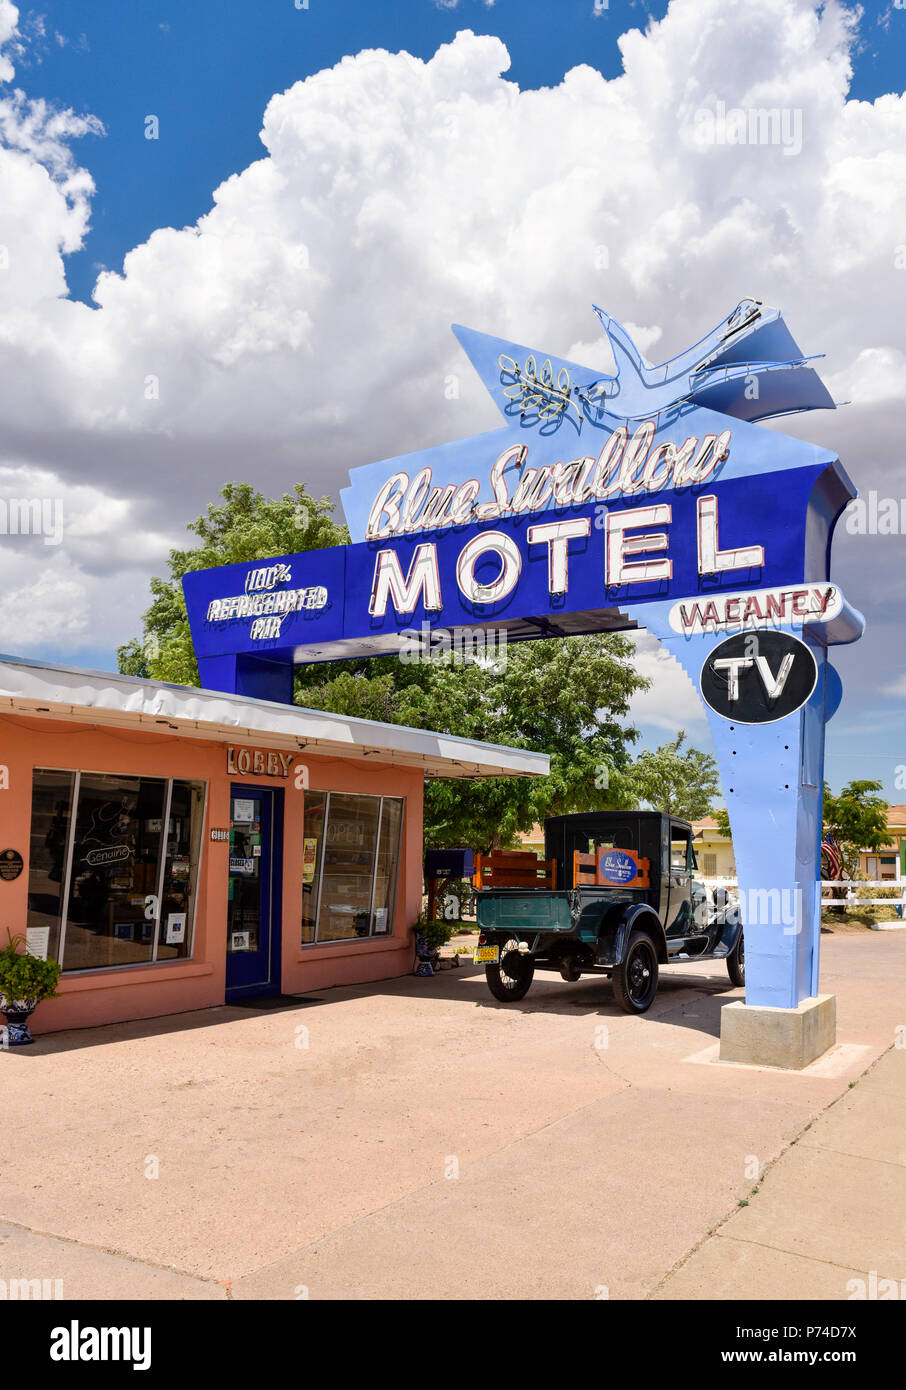 The Blue Swallow Motel exterior in Tucumcari, New Mexico Stock Photo